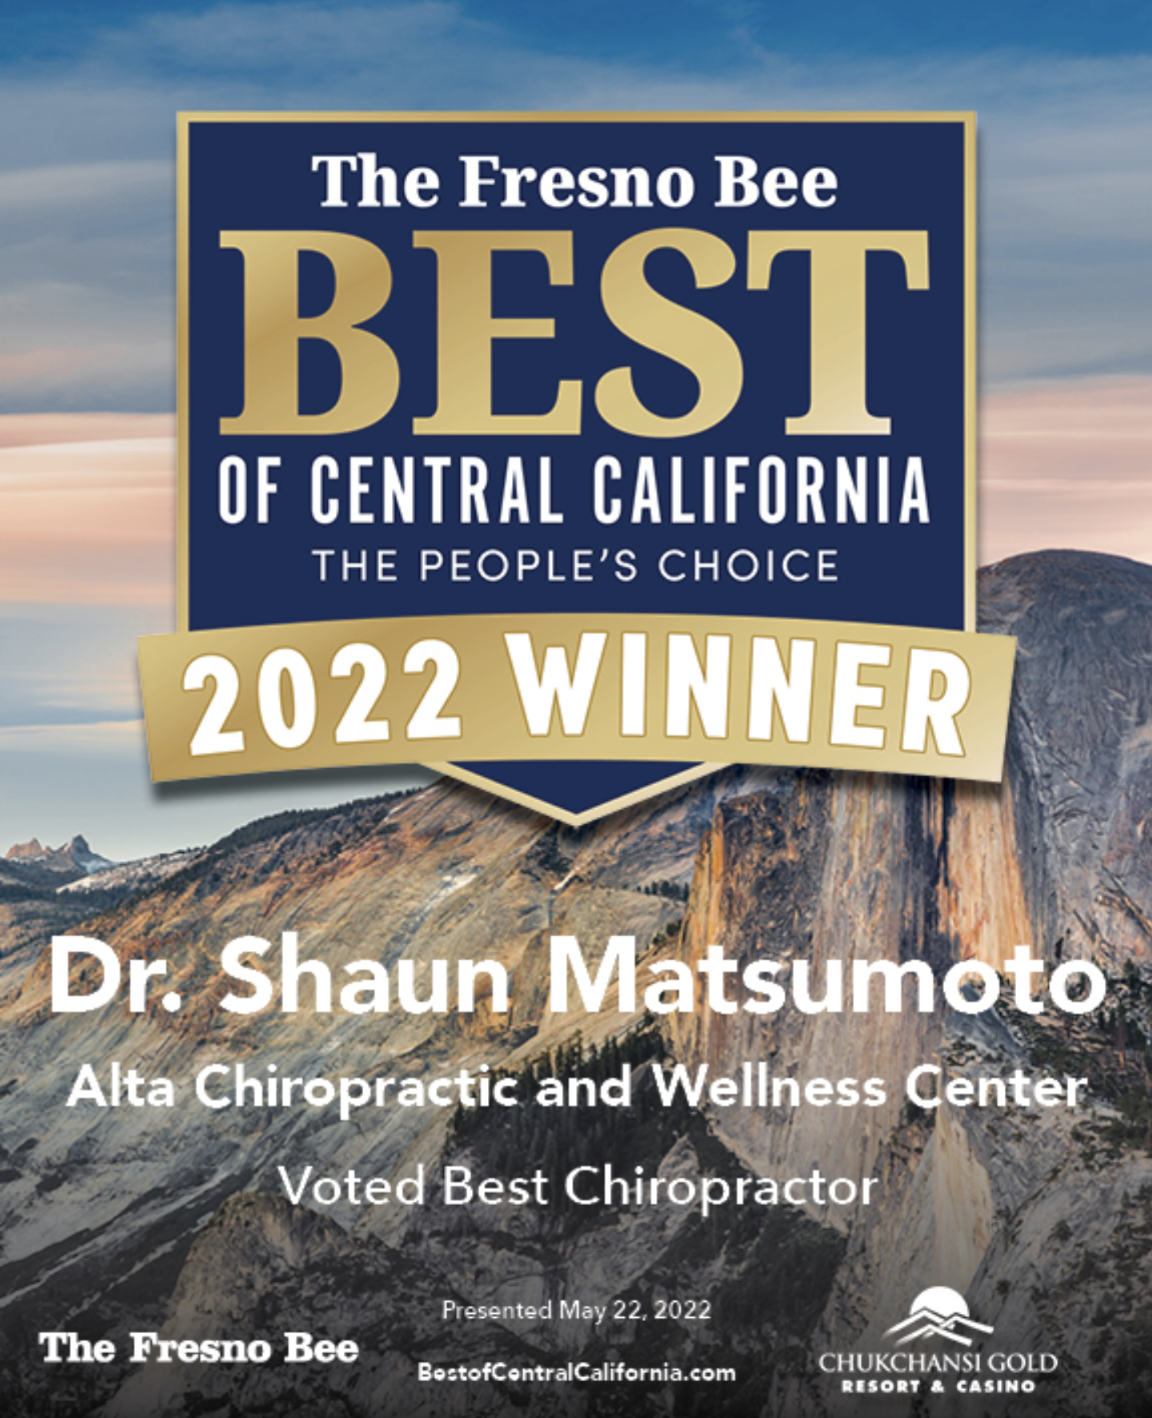 Dr. Shaun Matsumoto, Alta Chiropractic and Wellness Center 1171 N Alta Ave, Dinuba California 93618